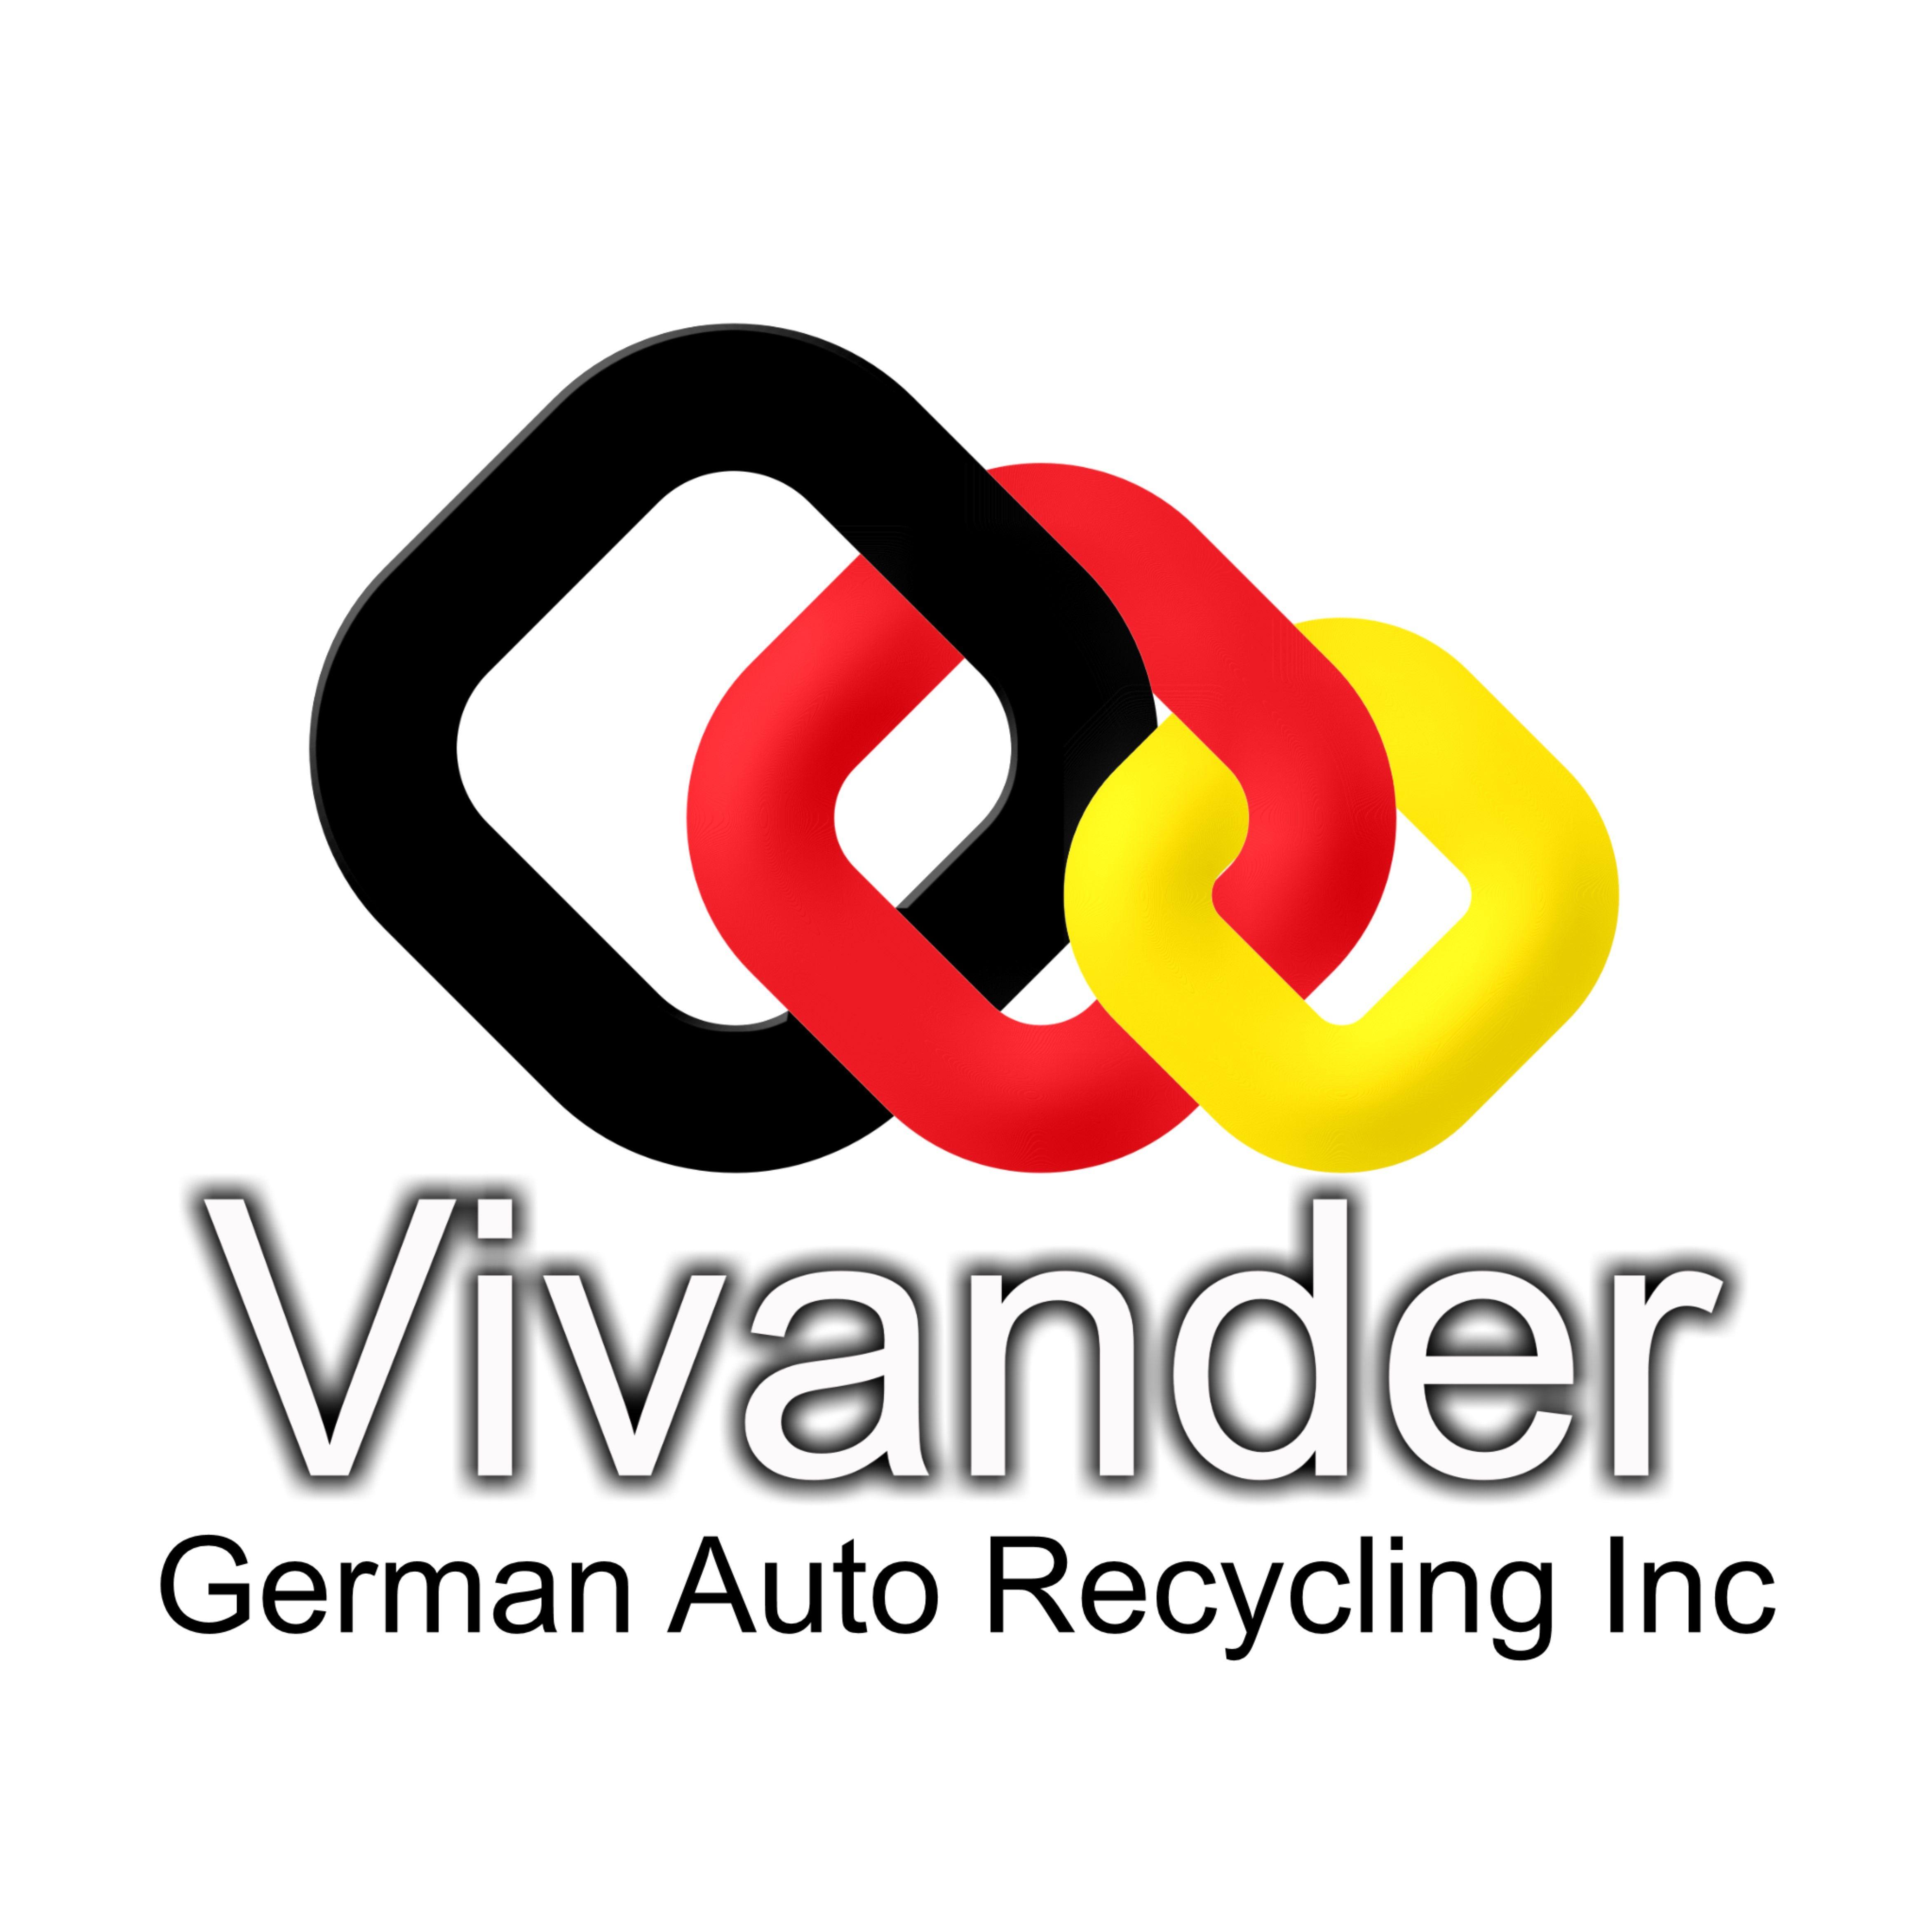 German Auto Logo - Logo Design #11 | 'Vivander German Auto Recycling Inc' design ...